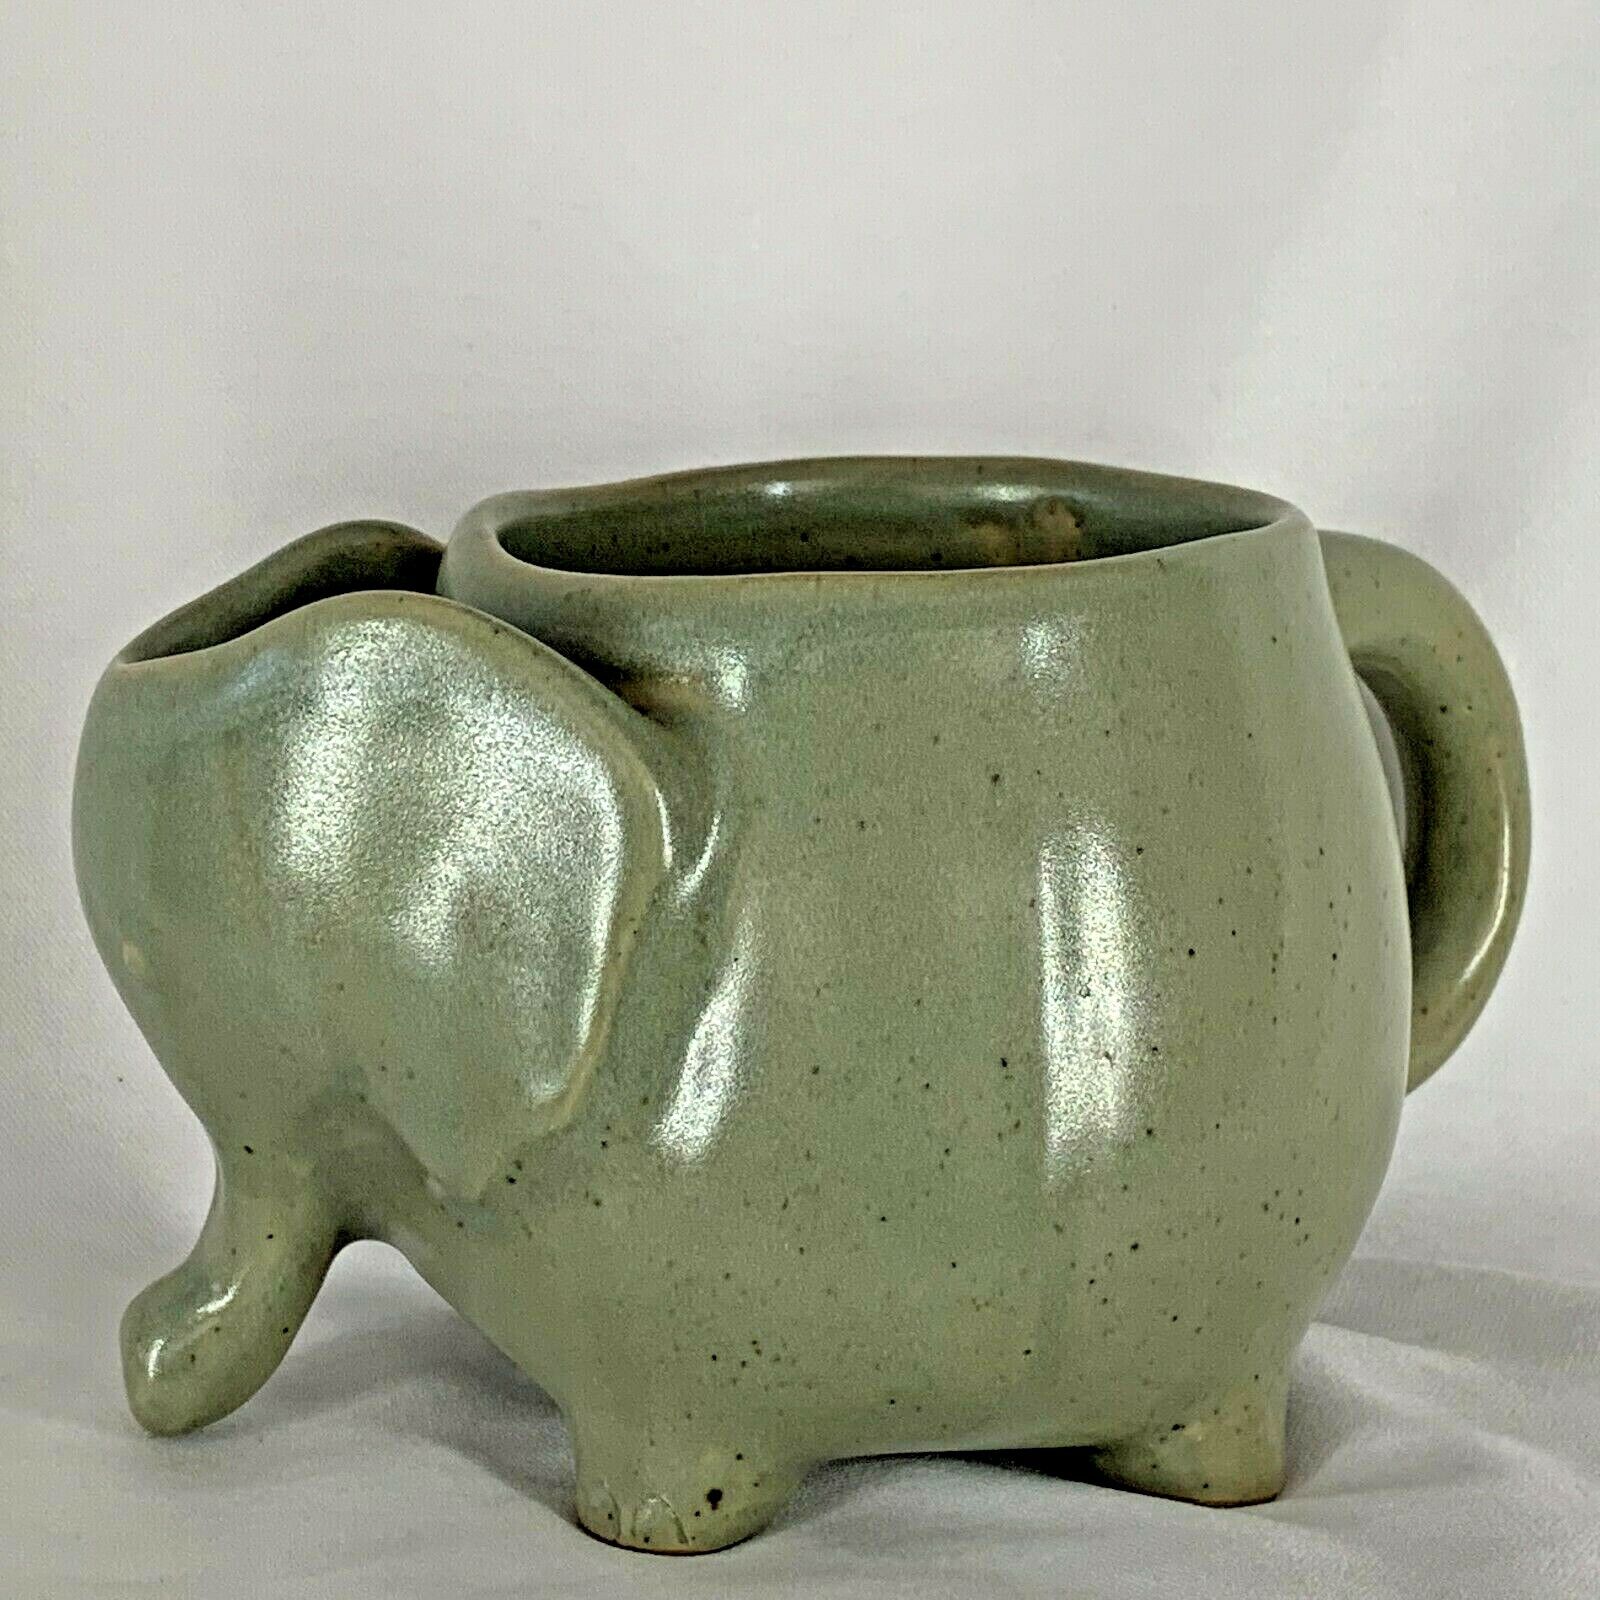 Elephant Tea Mug With Bag Holder Earthenware Made In Thailand Gray